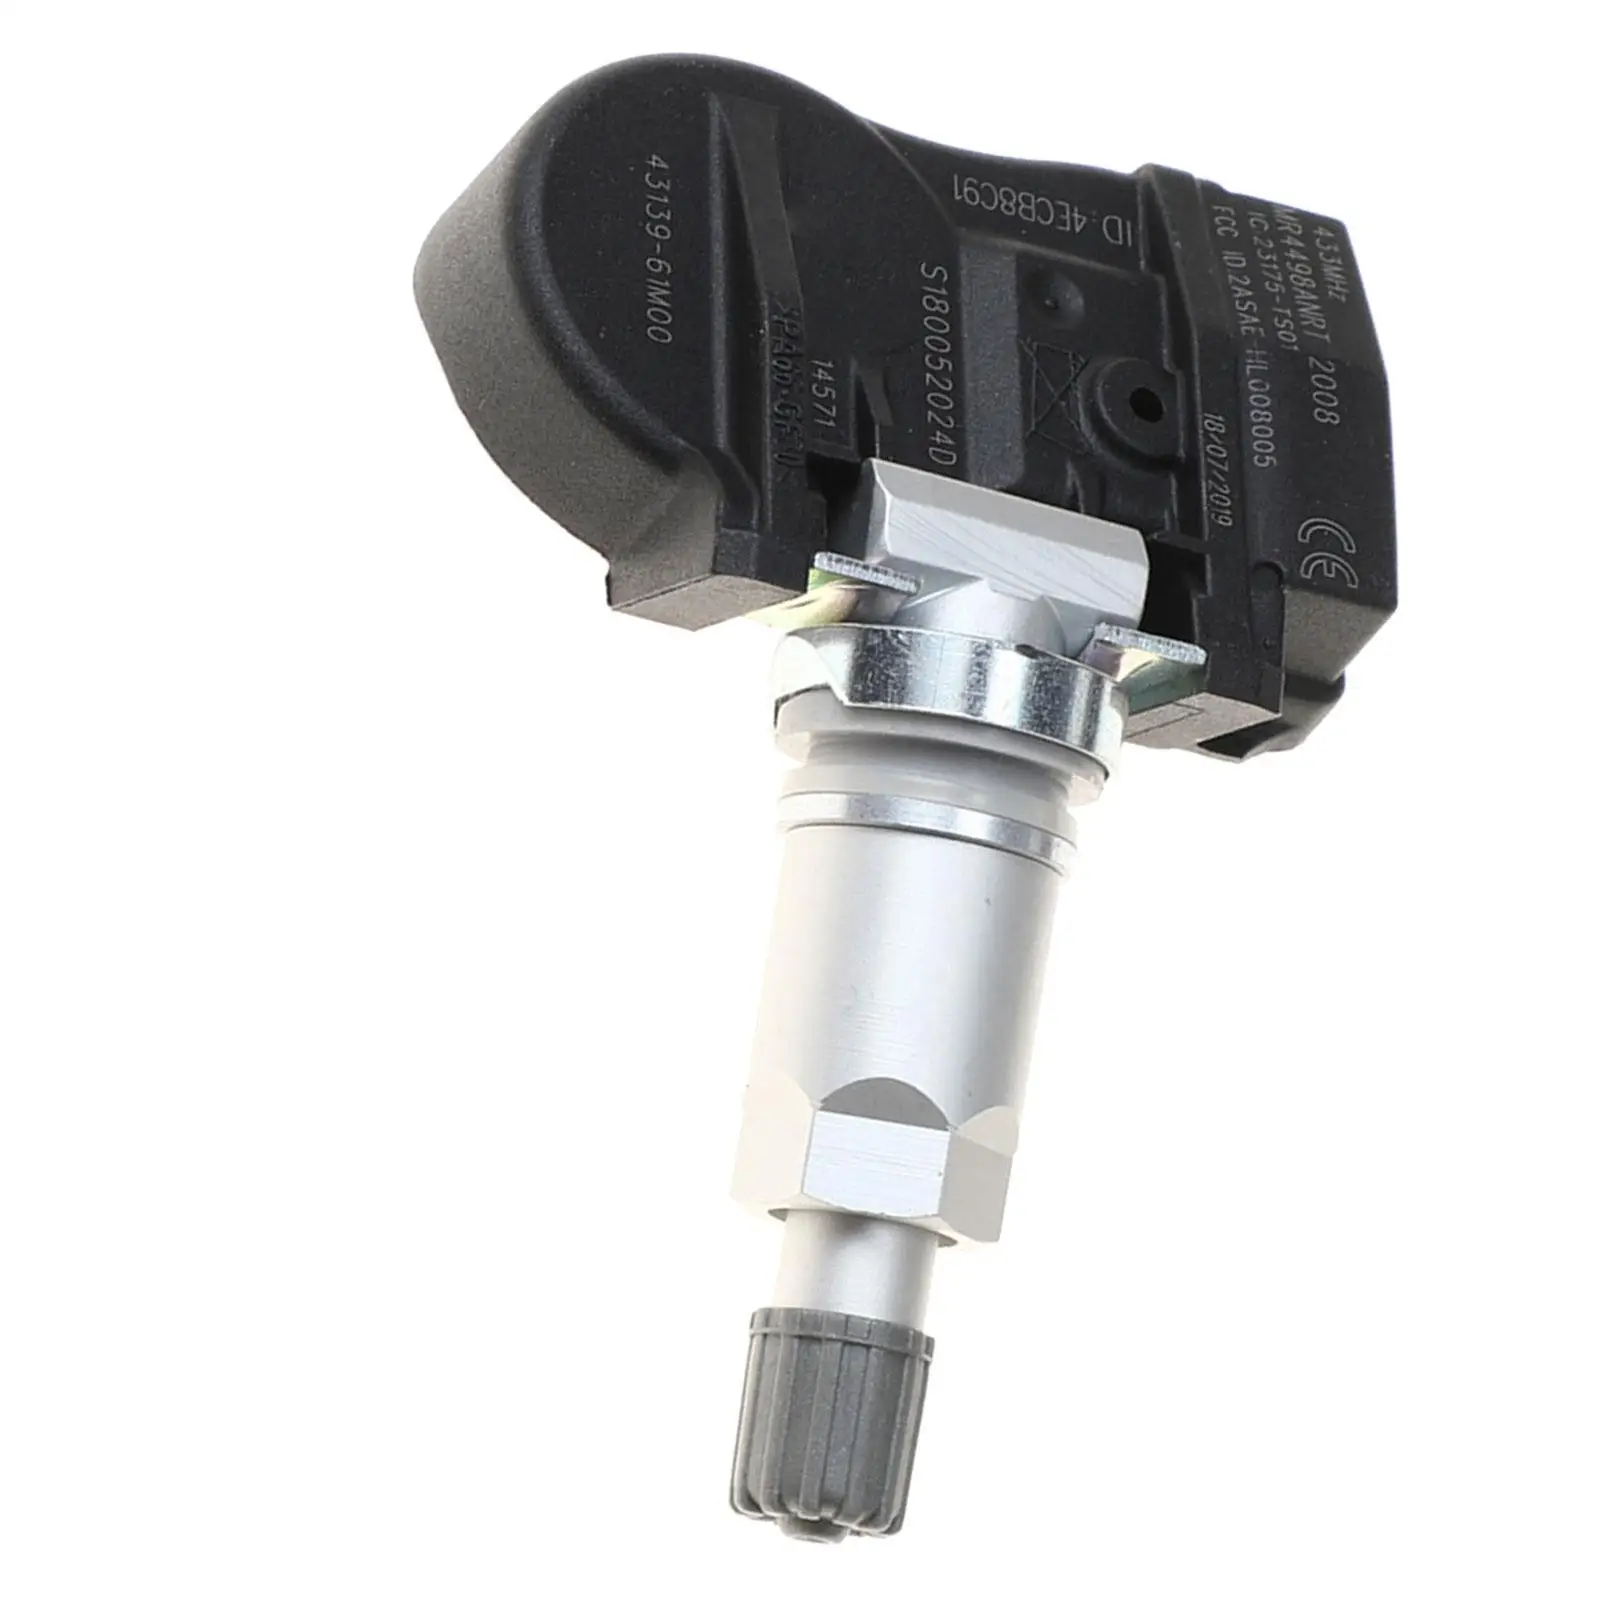 Tire Pressure Monitor Sensor replacement Suzuki Ignis Baleno Swift Jimmy Sport Automotive Accessory Good Performance